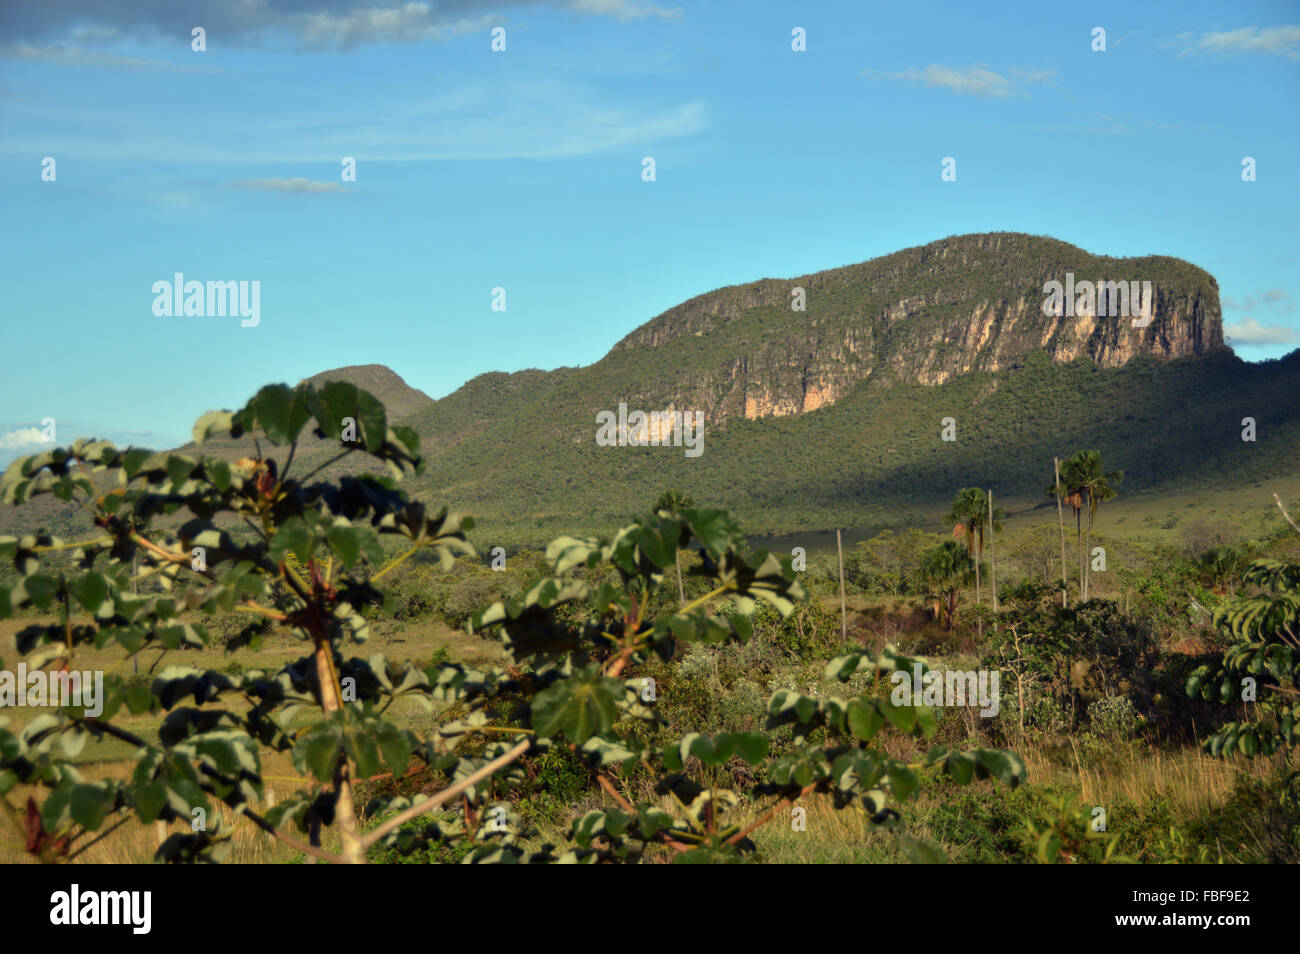 Baleia hill landscape with inbauba tree in front chapada dos veadeiros goias Brazil Stock Photo